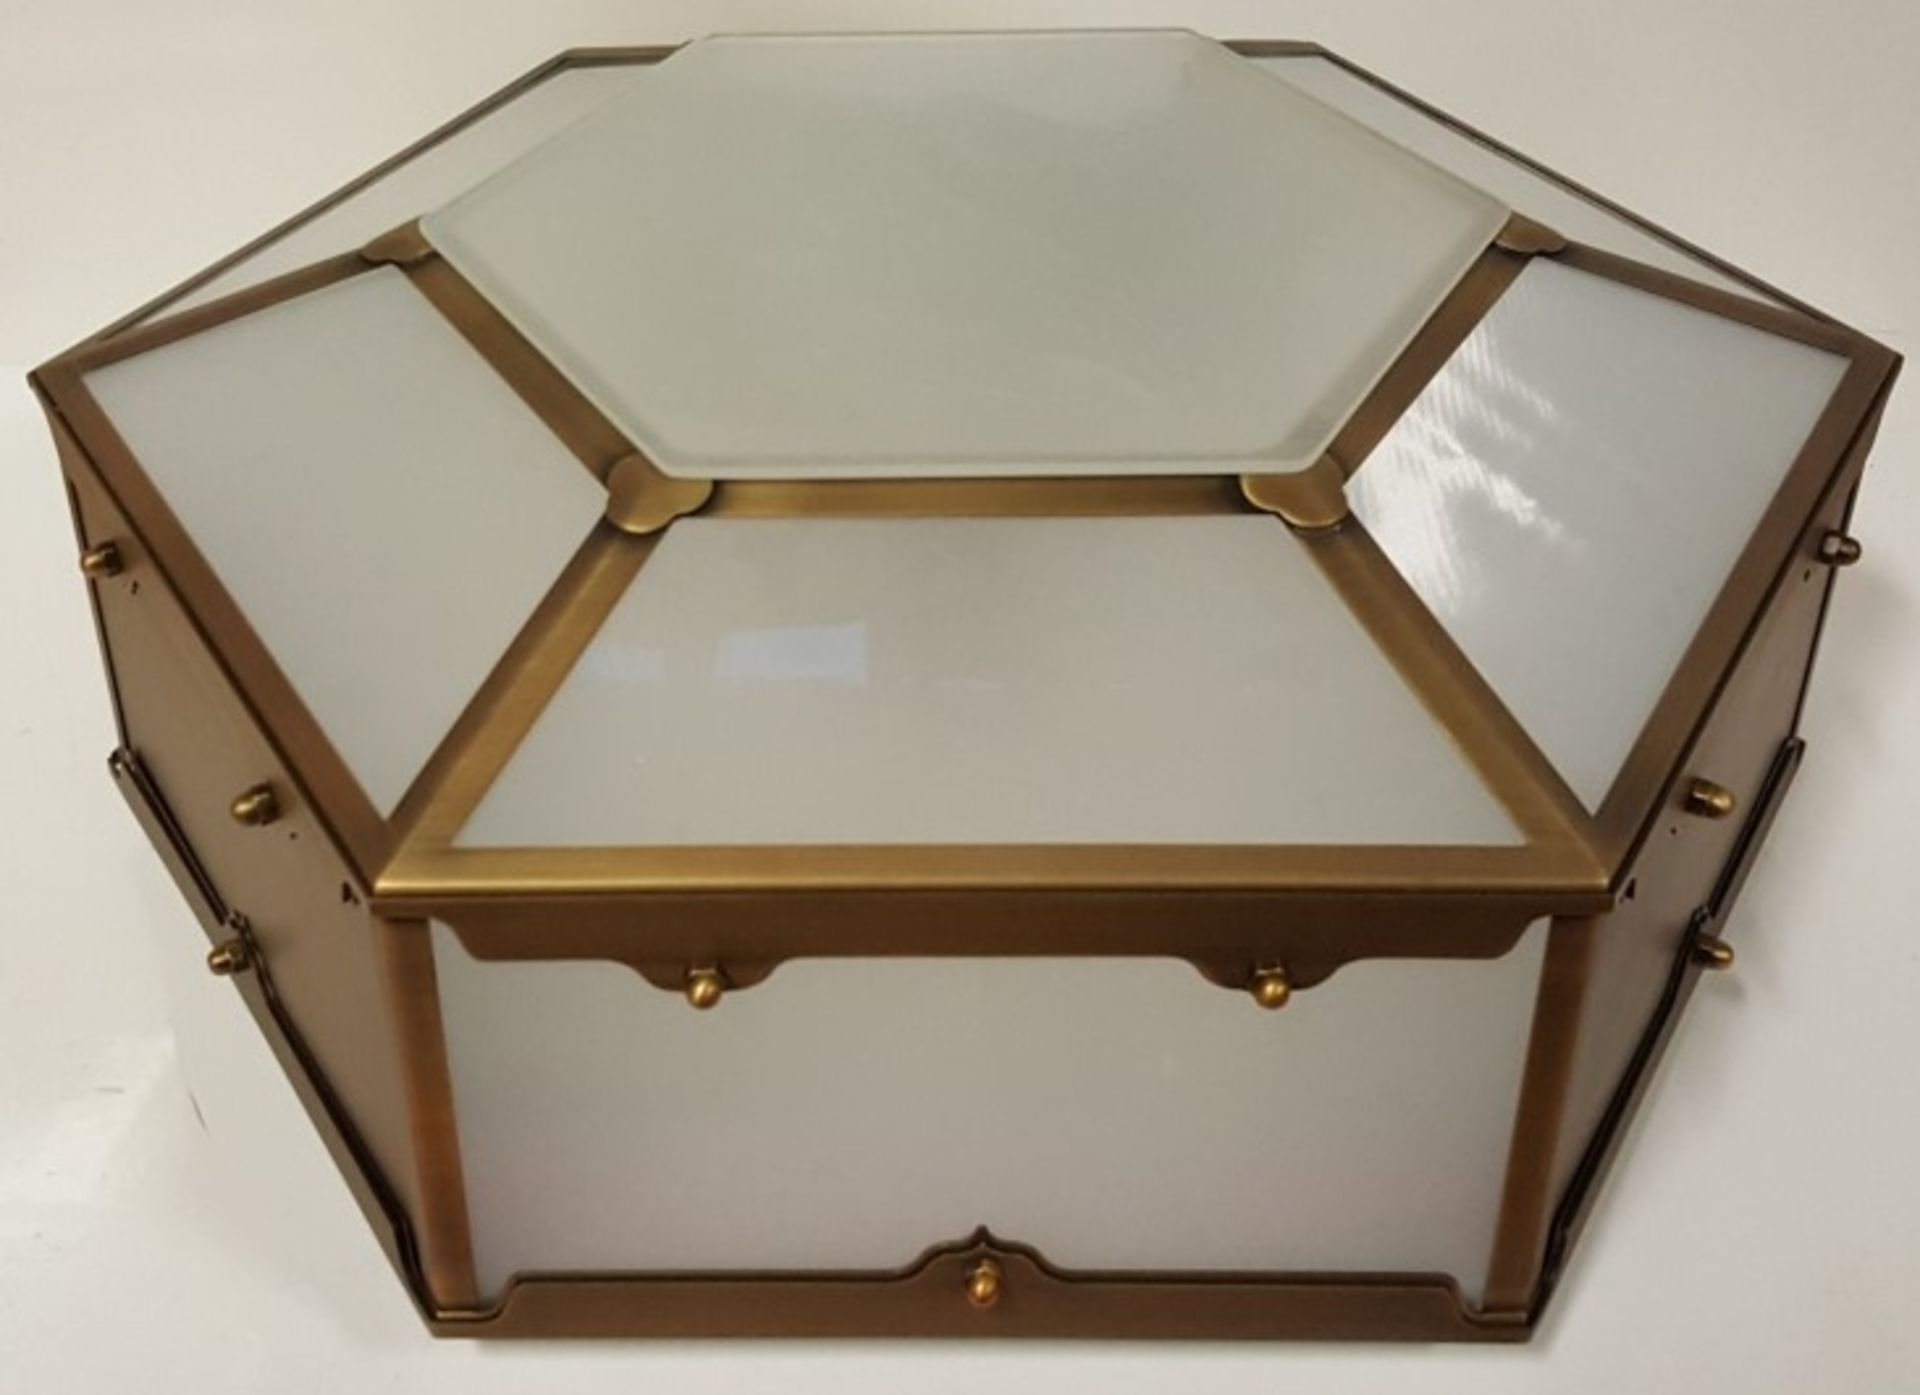 1 x Chelsom Flush Fitting Hexagonal Shaped Light Fitting In A Antique Brass Finish - REF:J2354